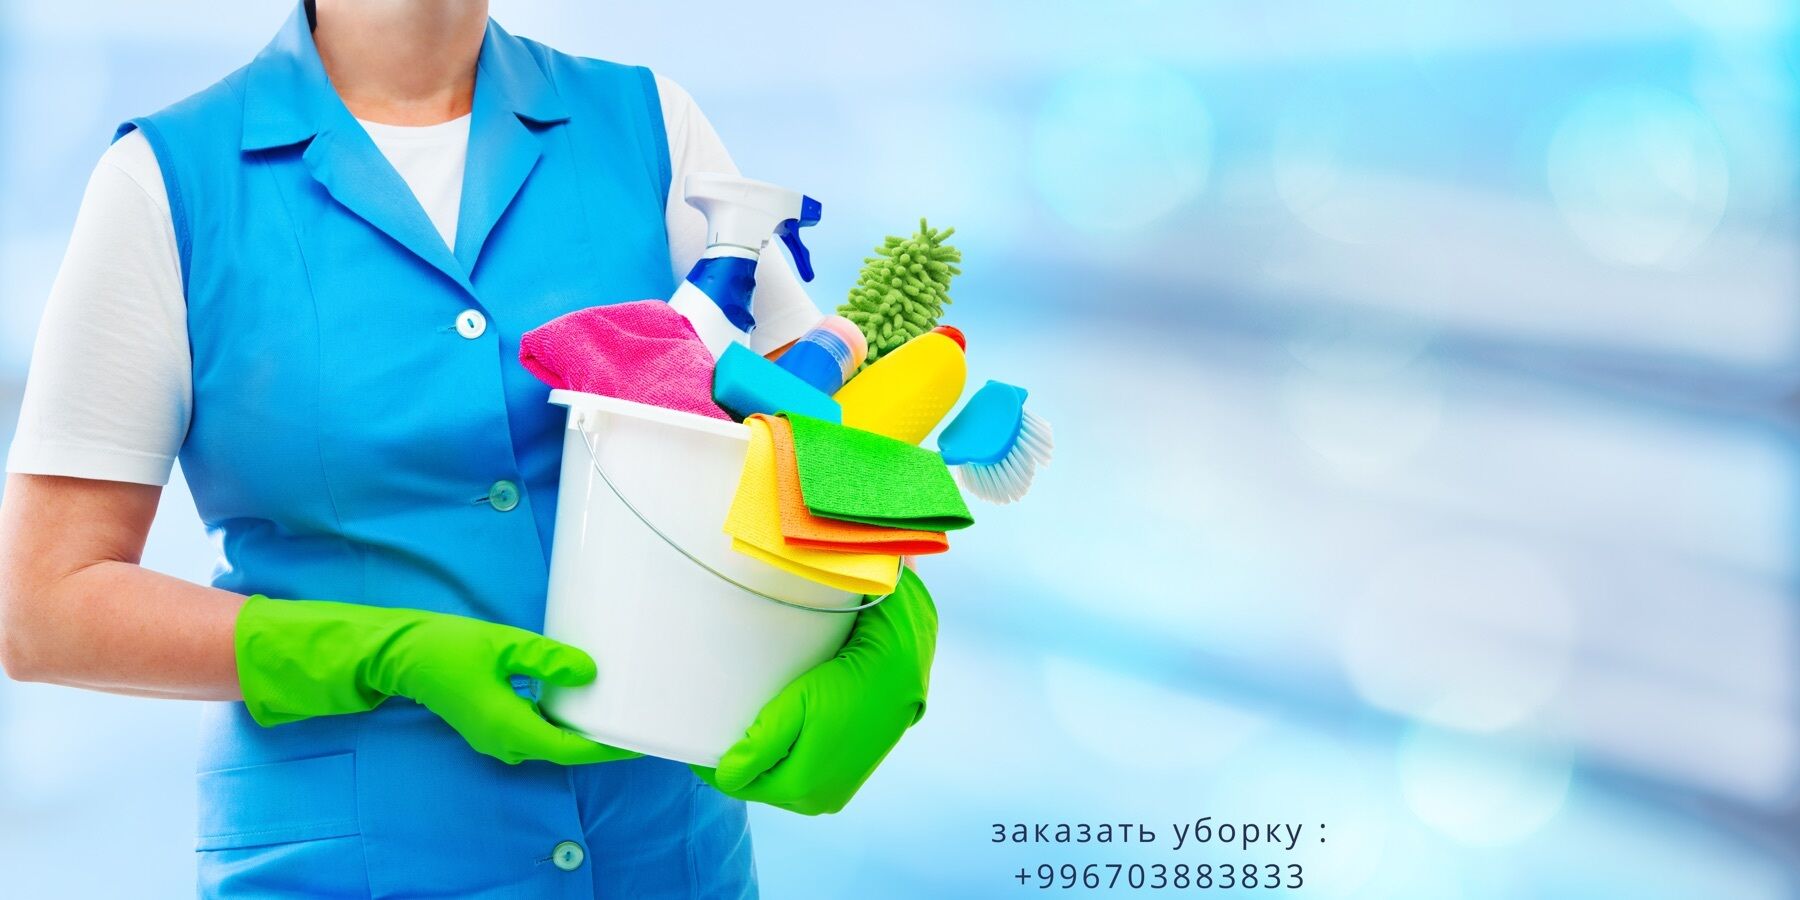 Уборка помещений,уборка квартир,уборка домов ➤ Кыргызстан ᐉ Бизнес-профиль компании на lalafo.kg